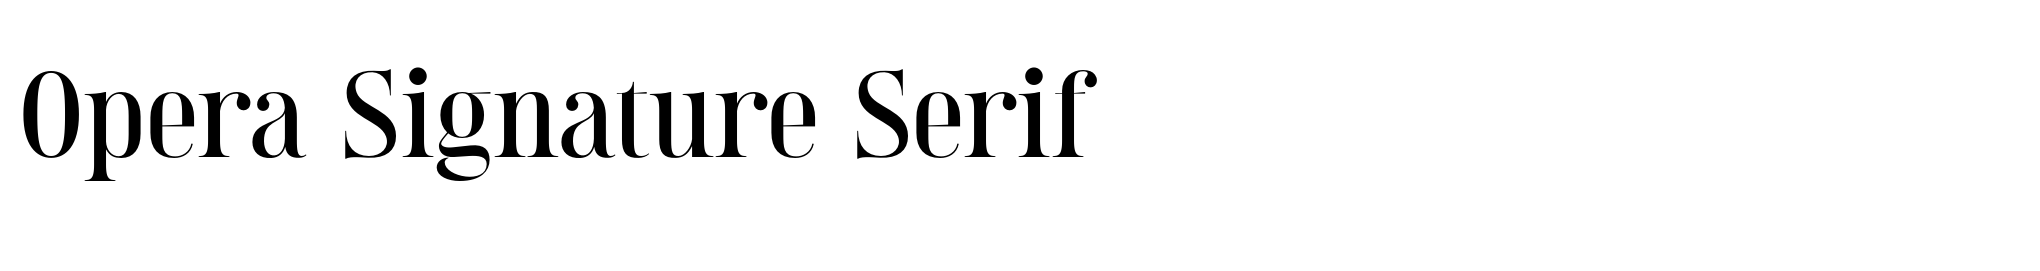 Opera Signature Serif image